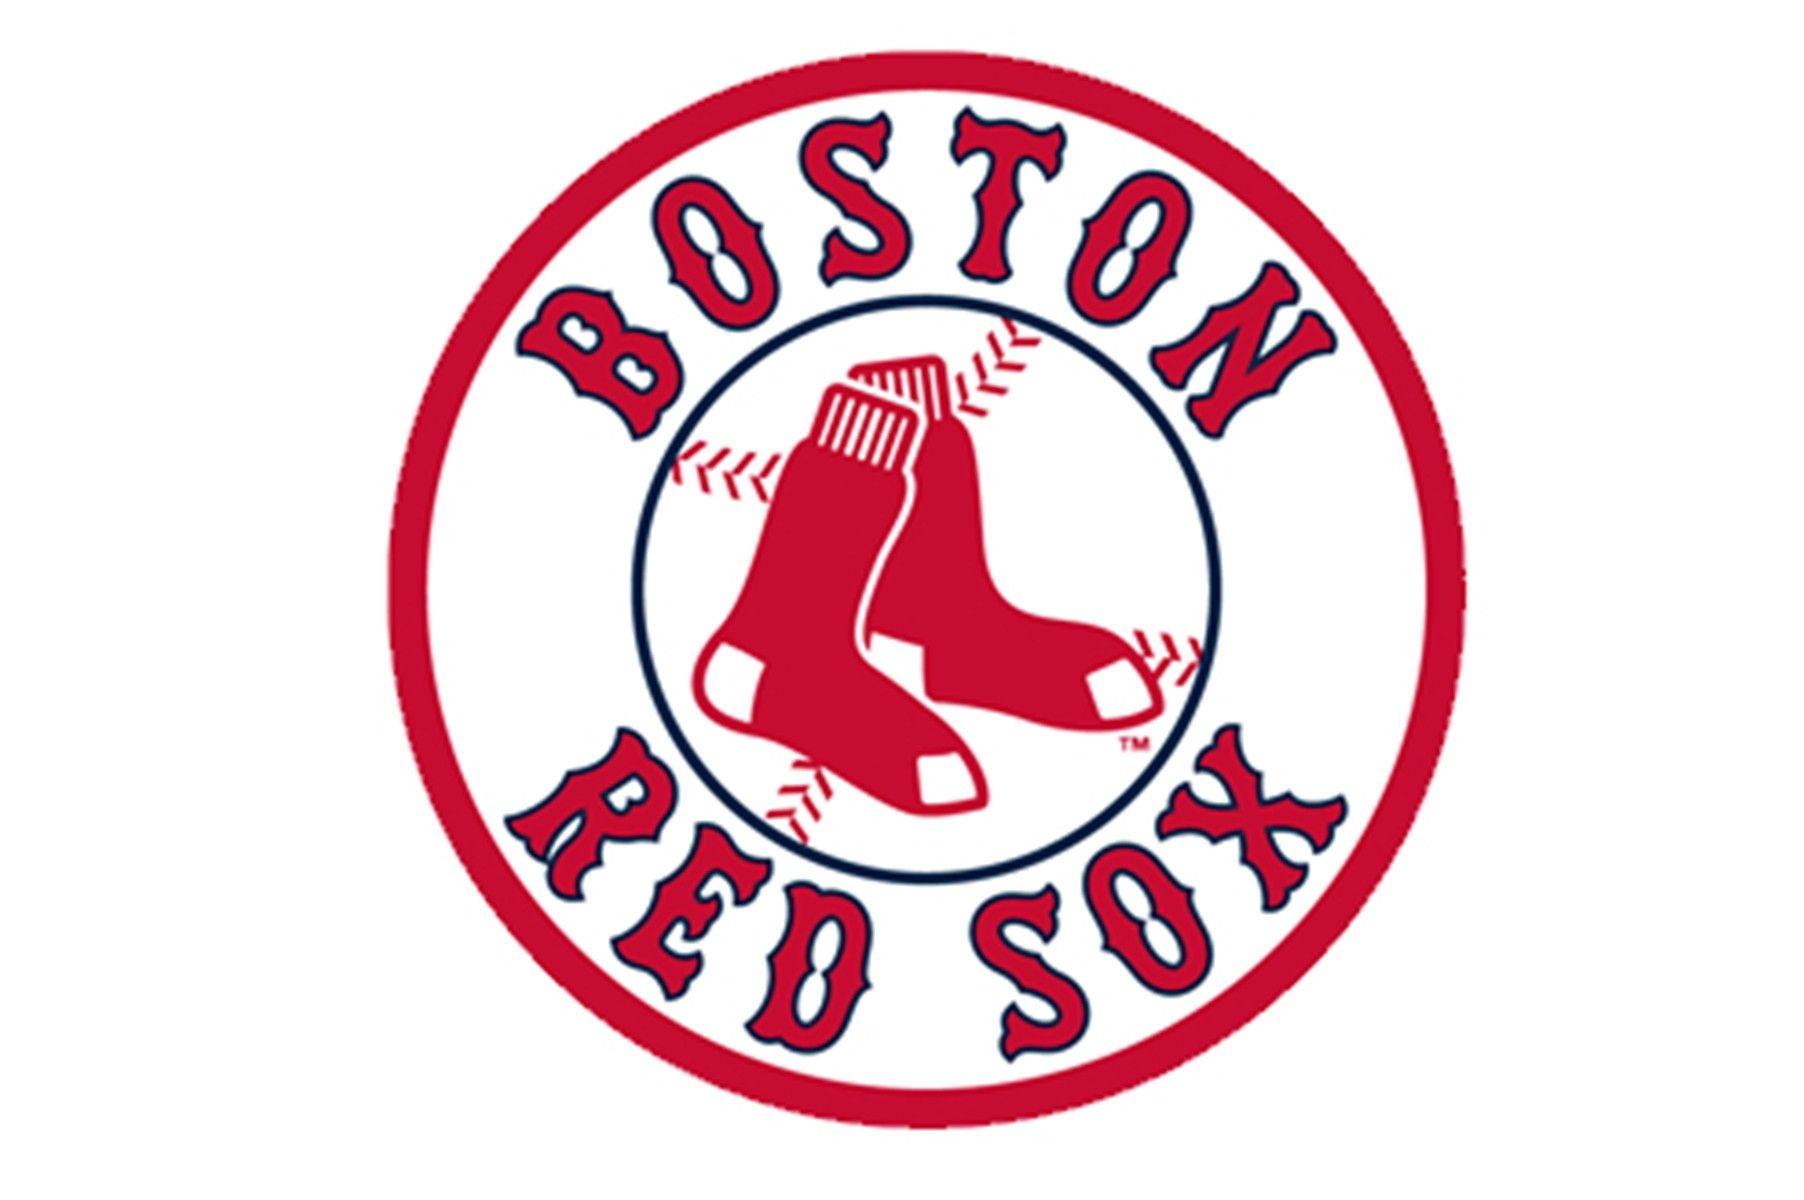 Boston Red Soxs Team History